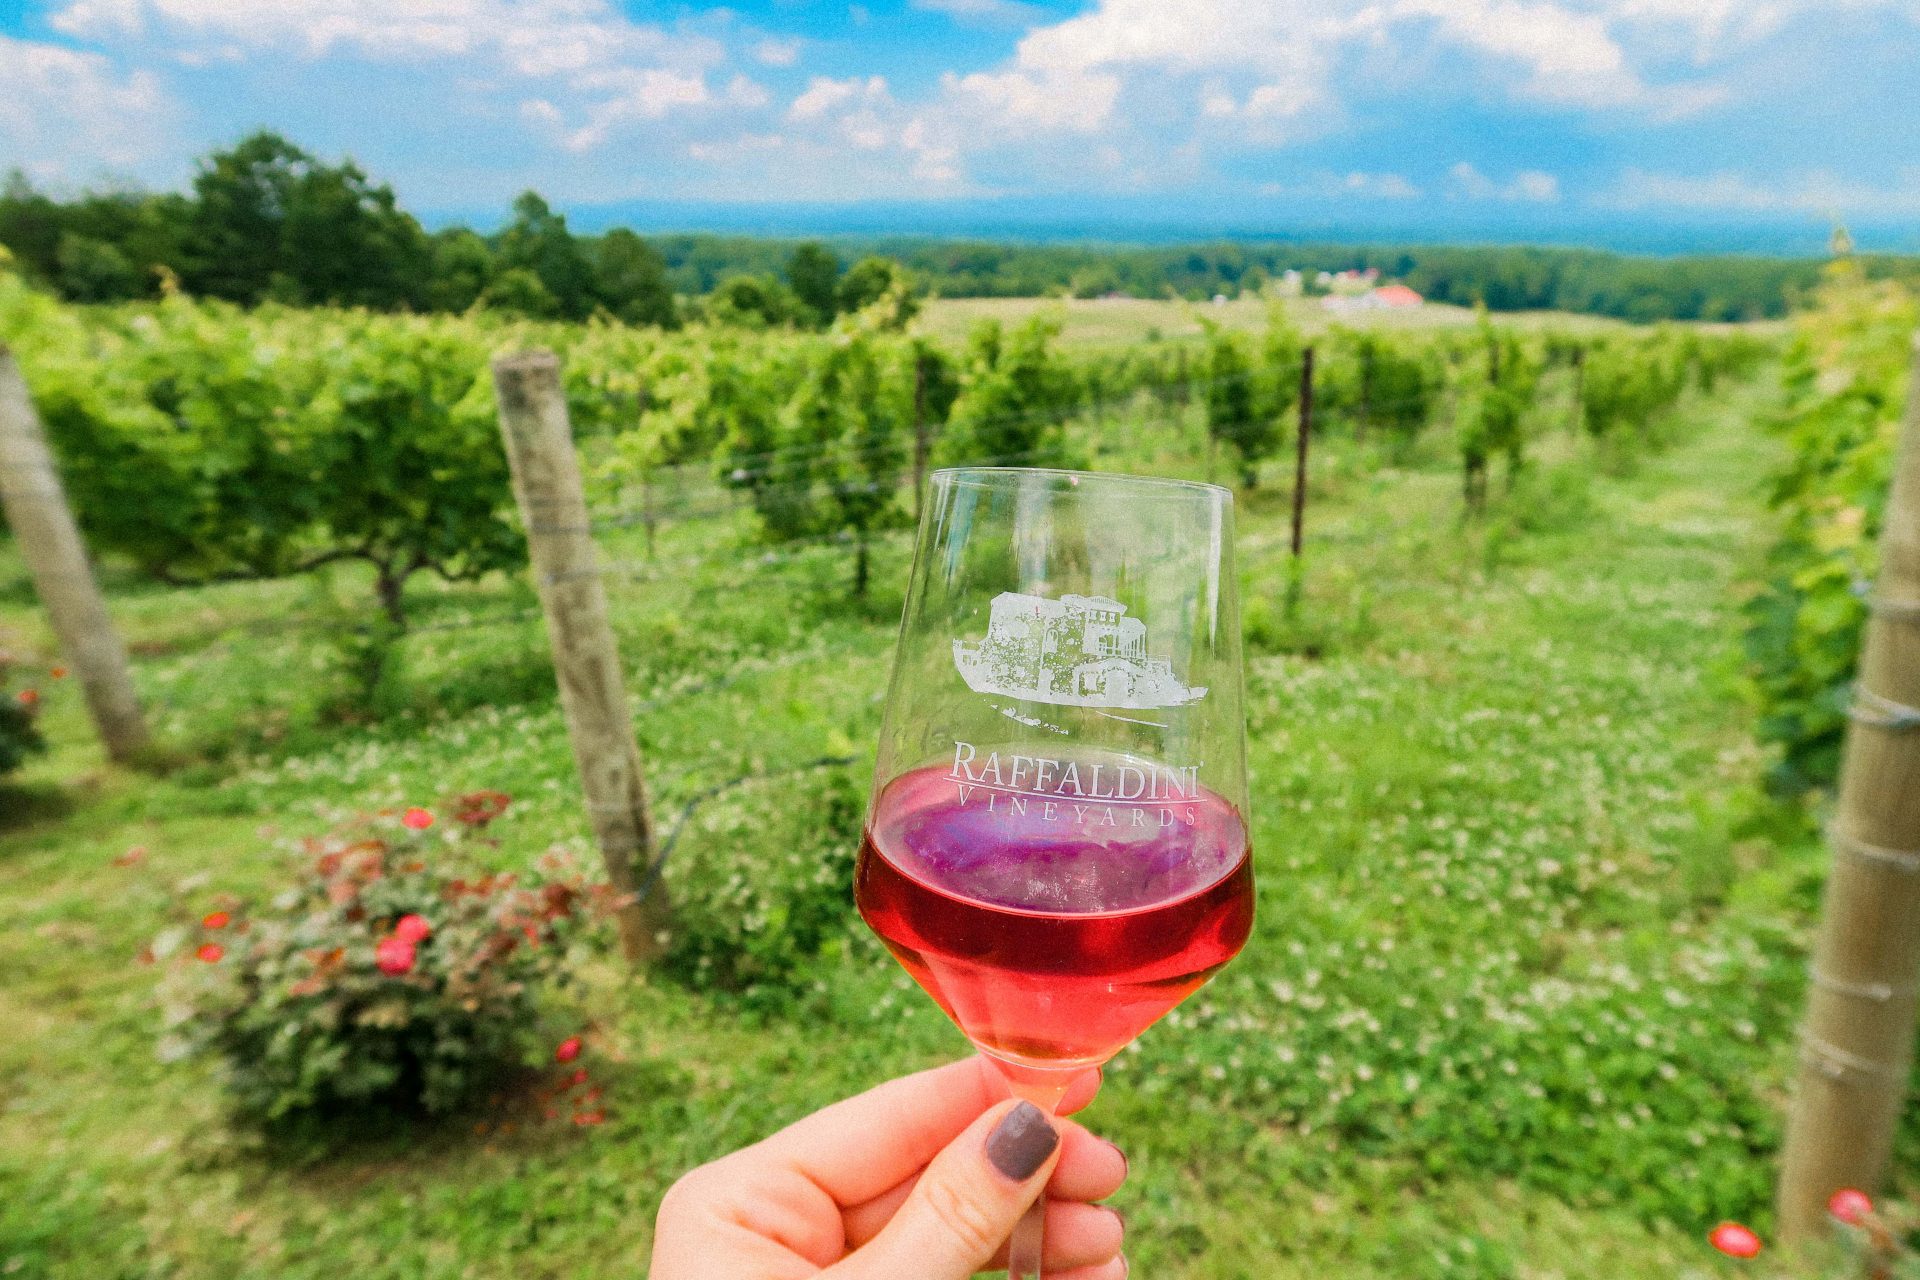 A Day Trip to Raffaldini Vineyards | North Carolina Winery